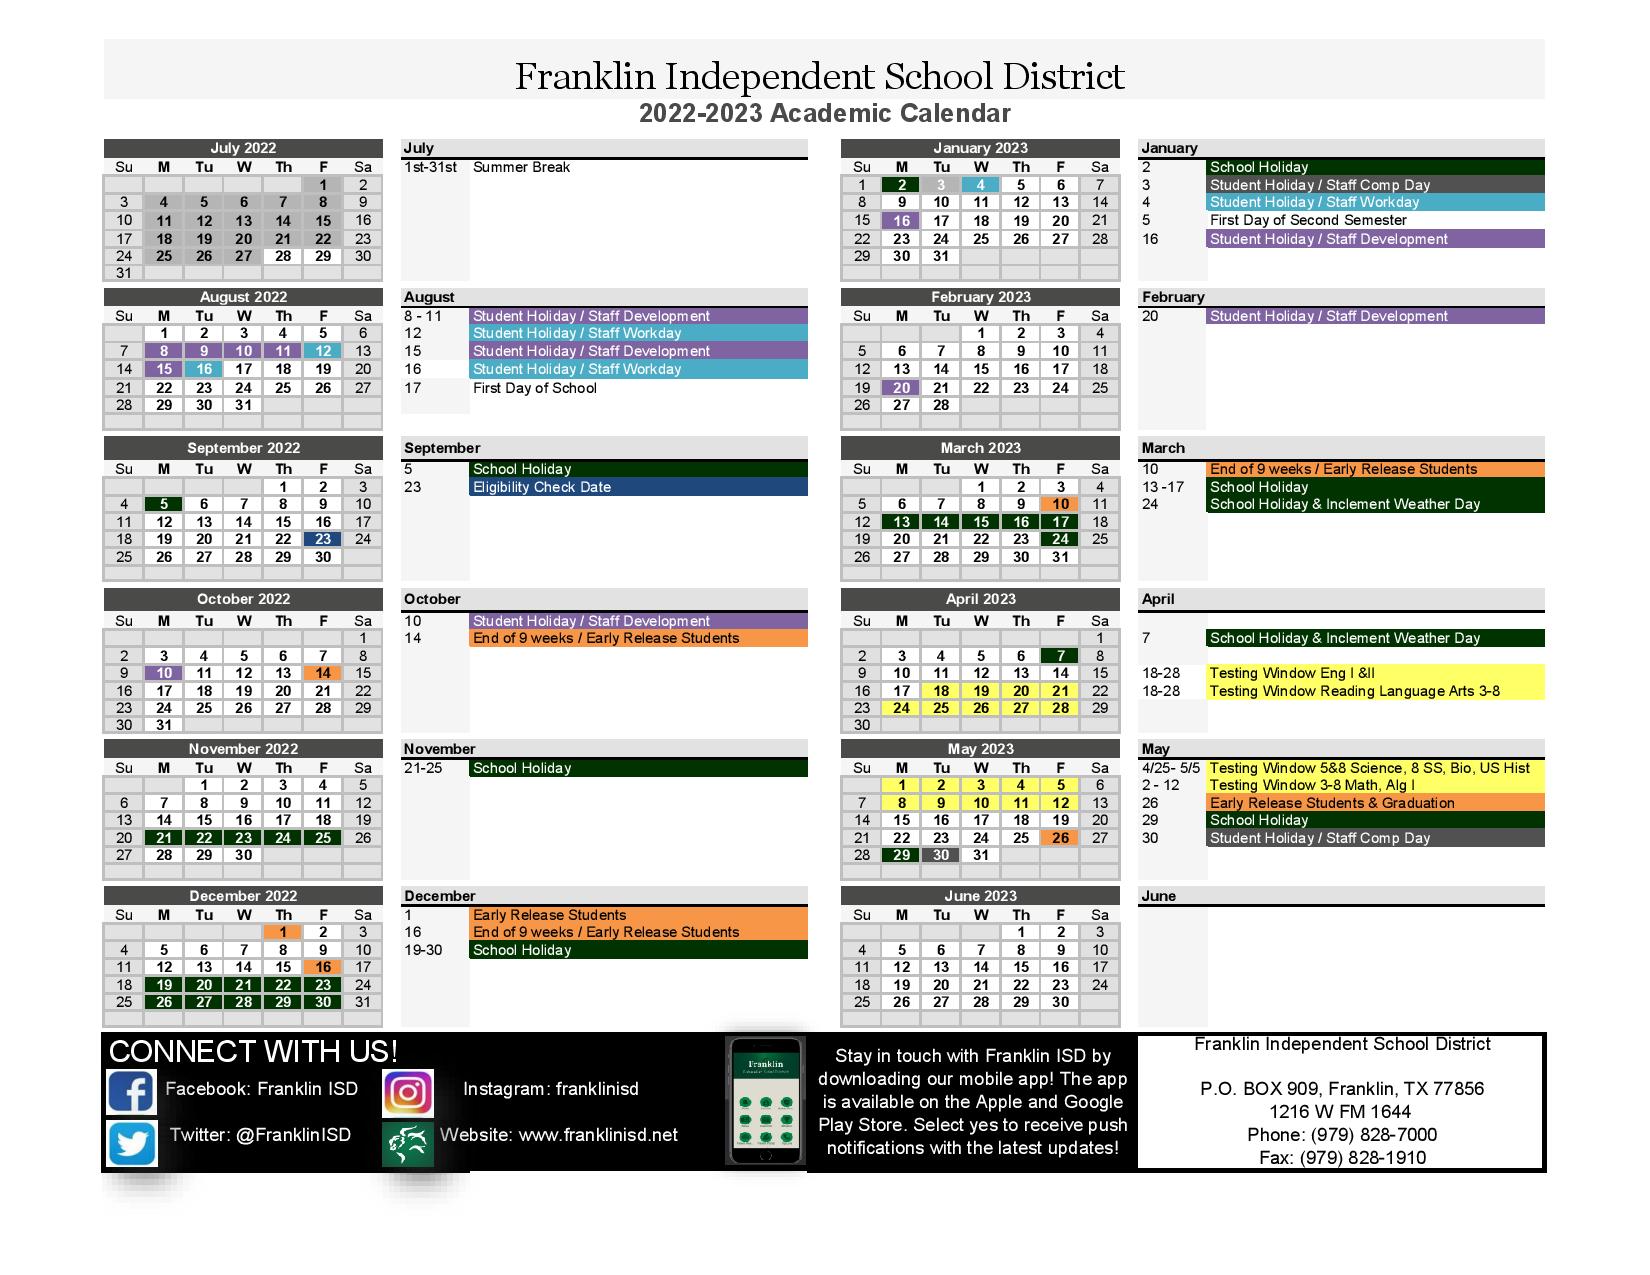 Franklin Independent School District Calendar